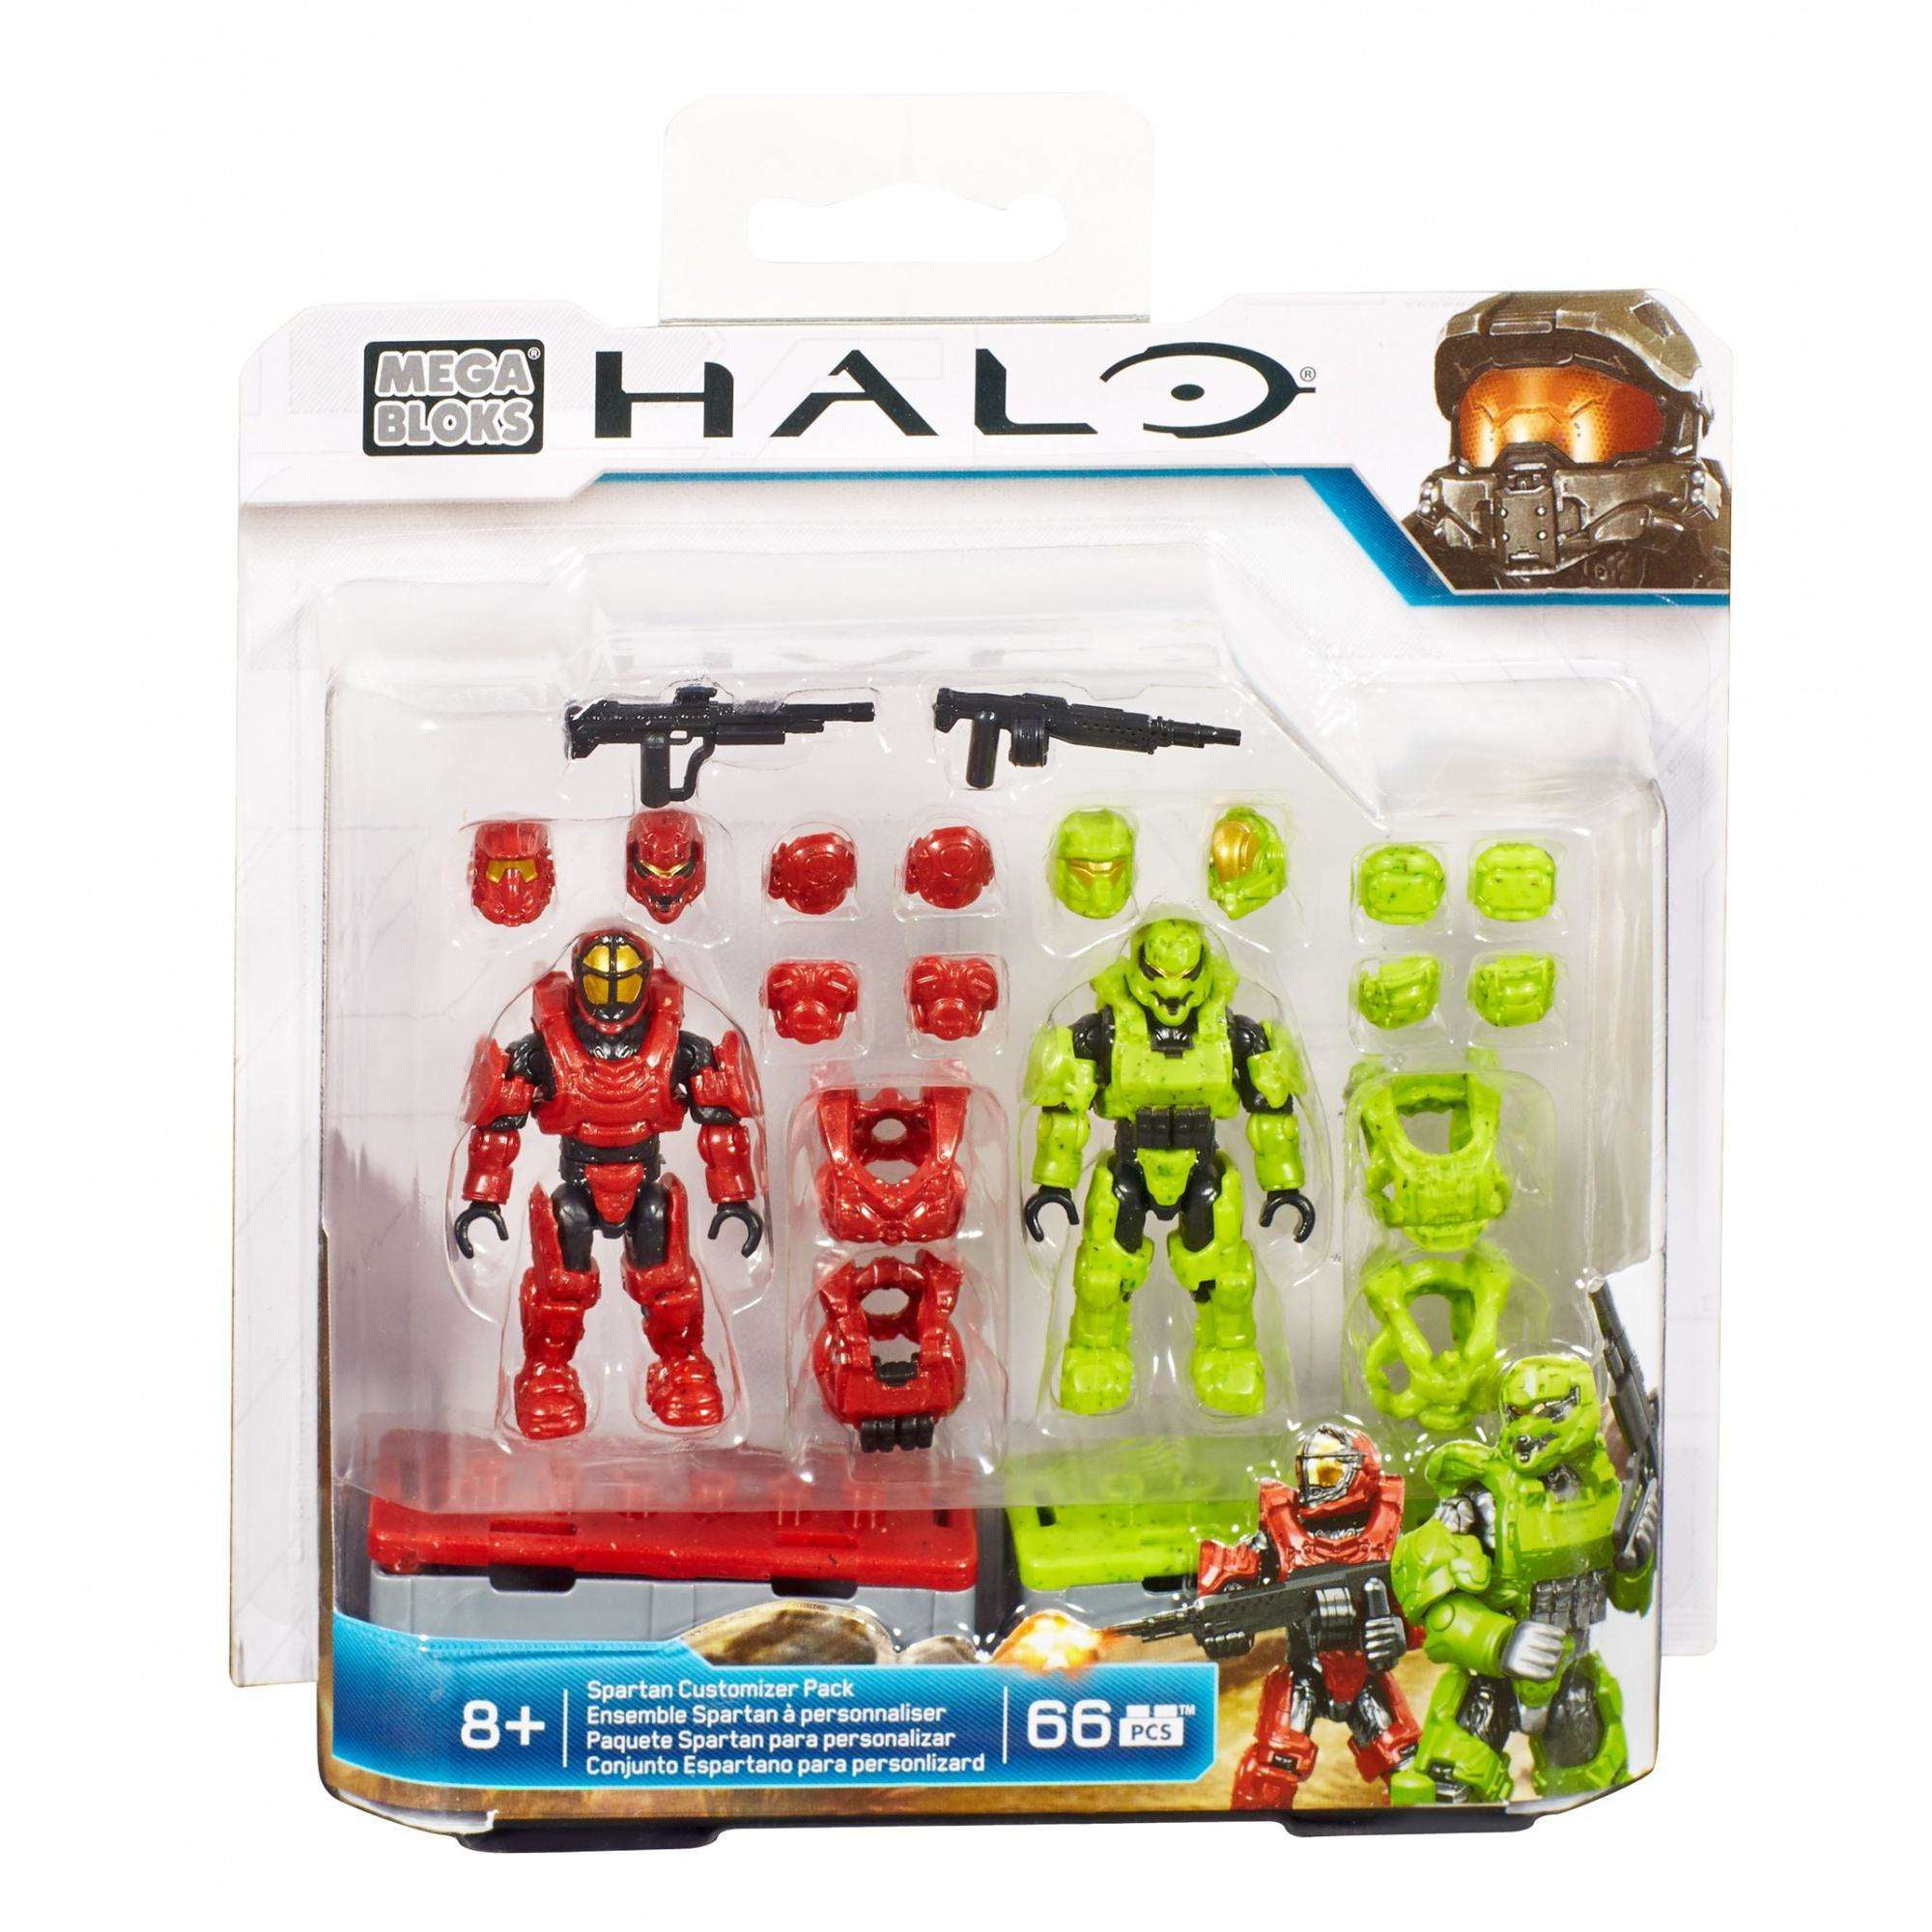 Mega Bloks Halo UNSC Spartan Customizer Pack